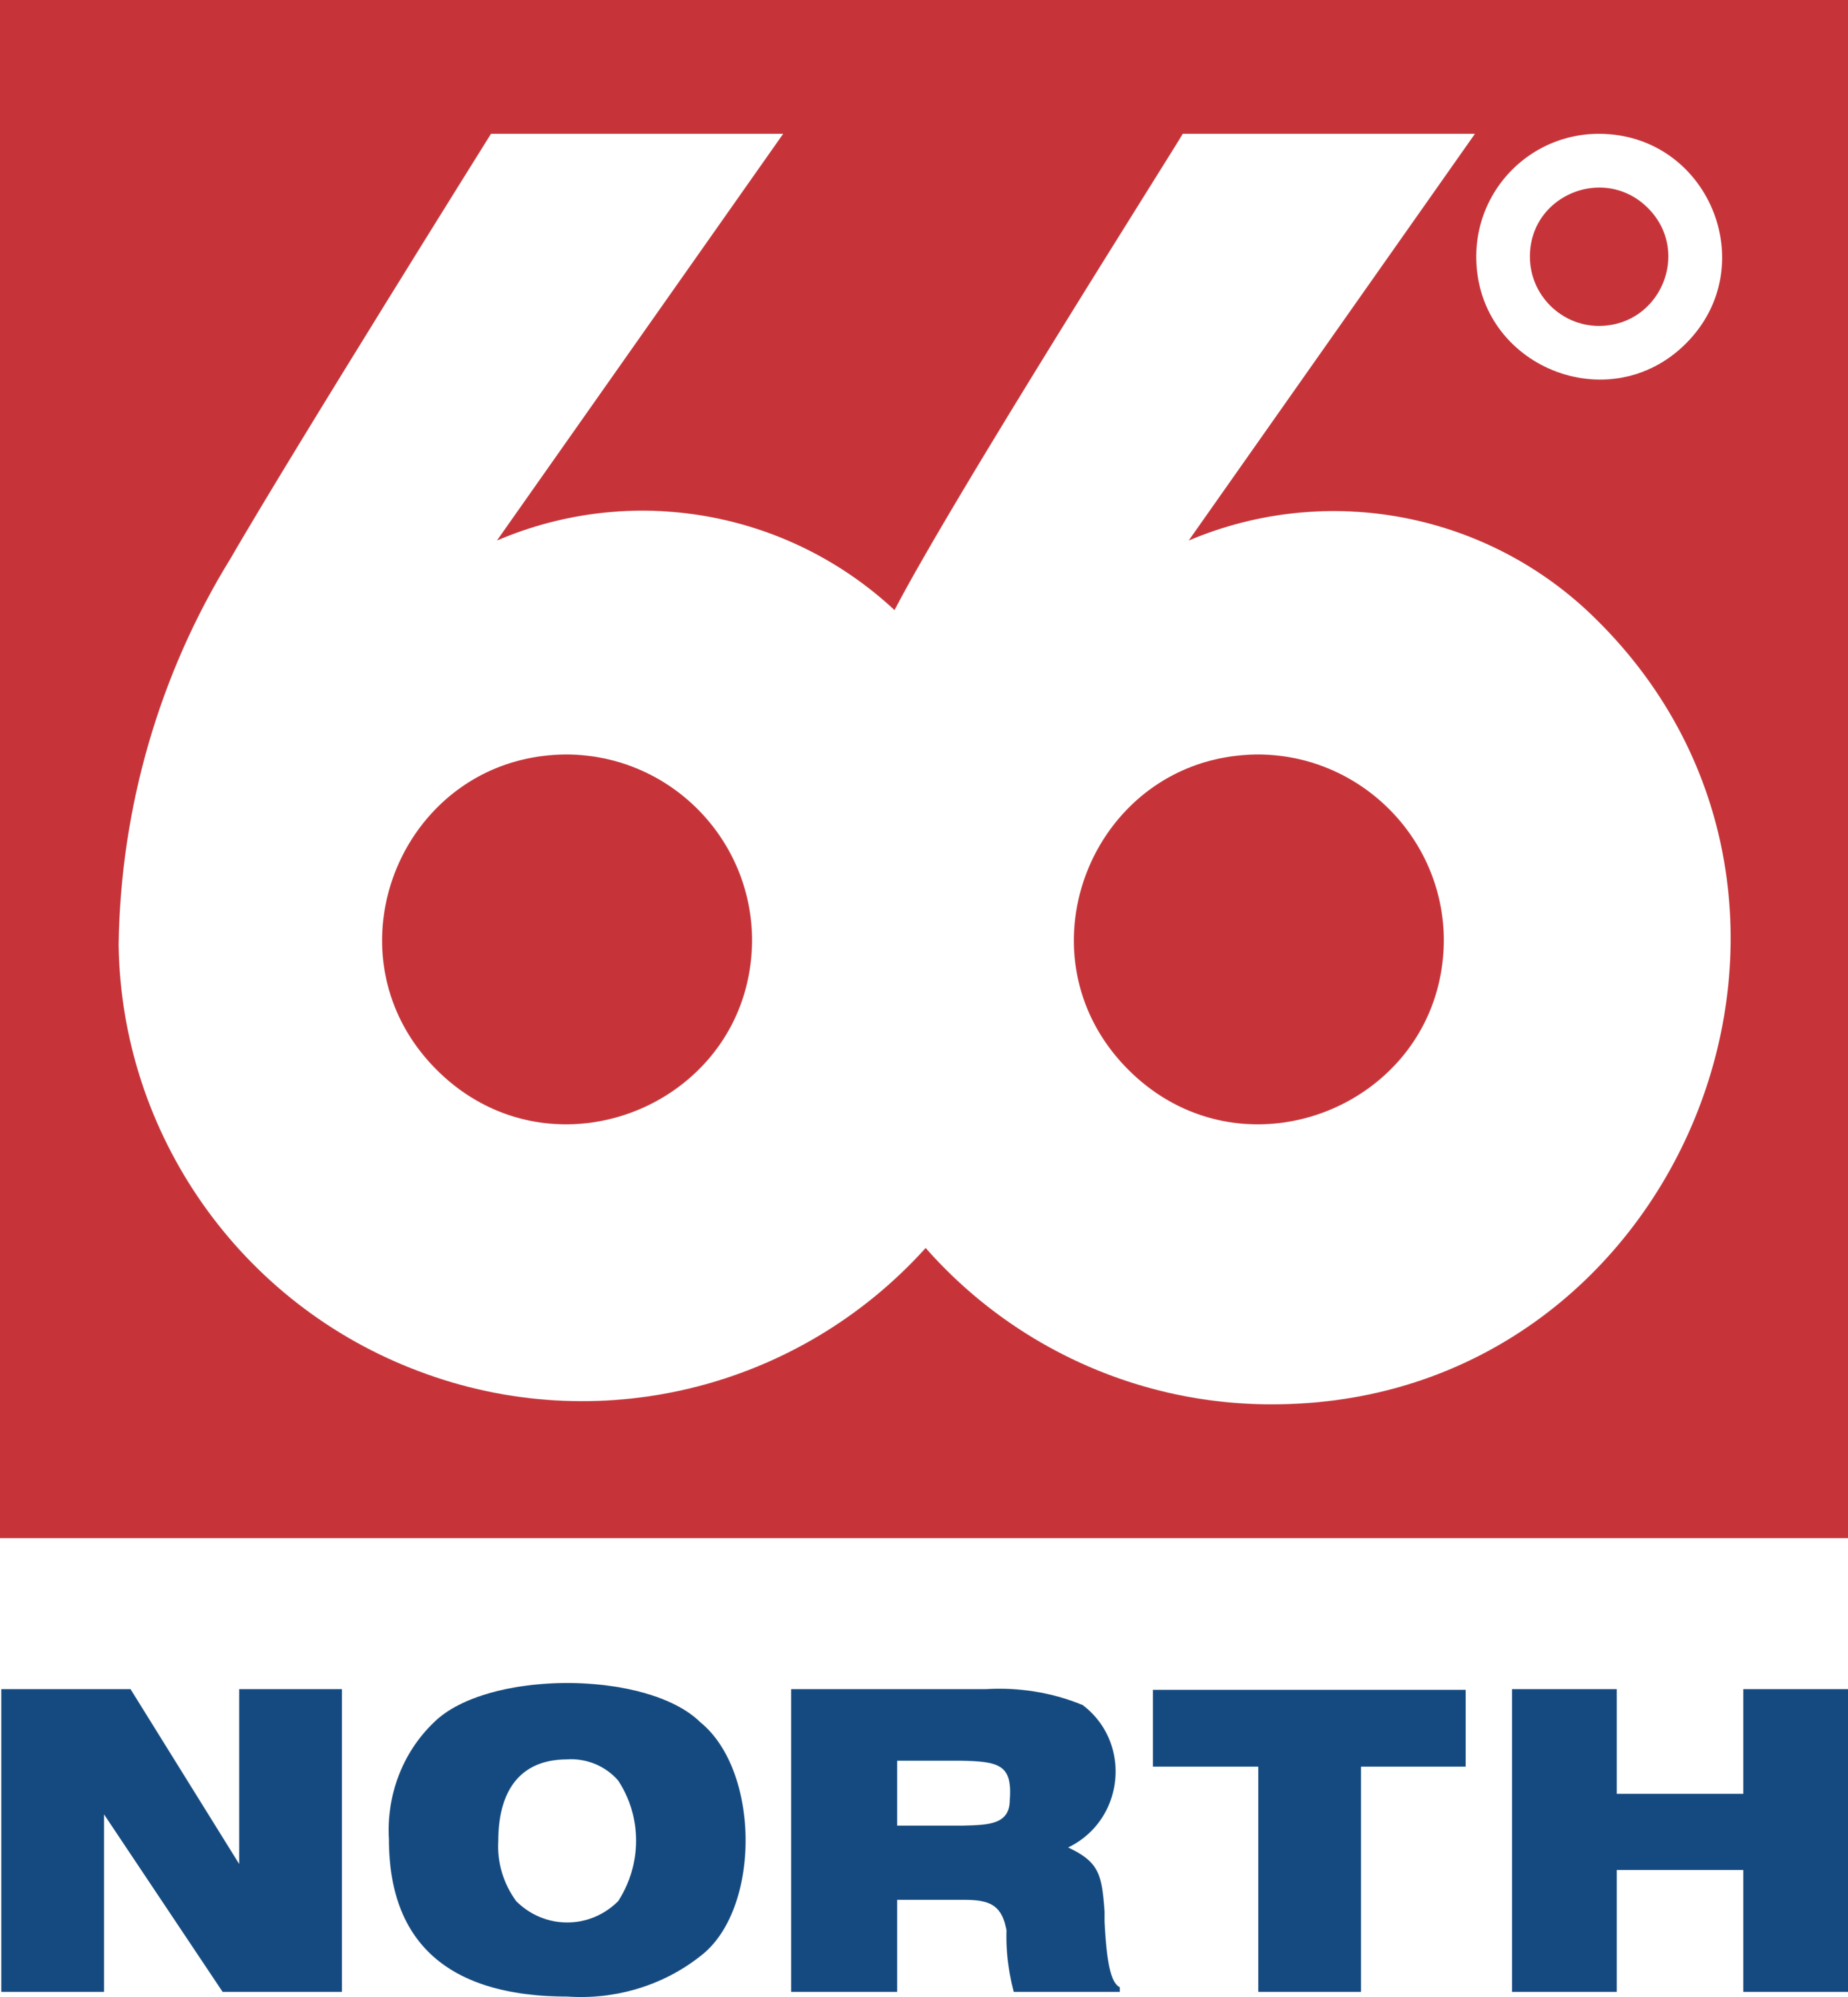 66 North Logo